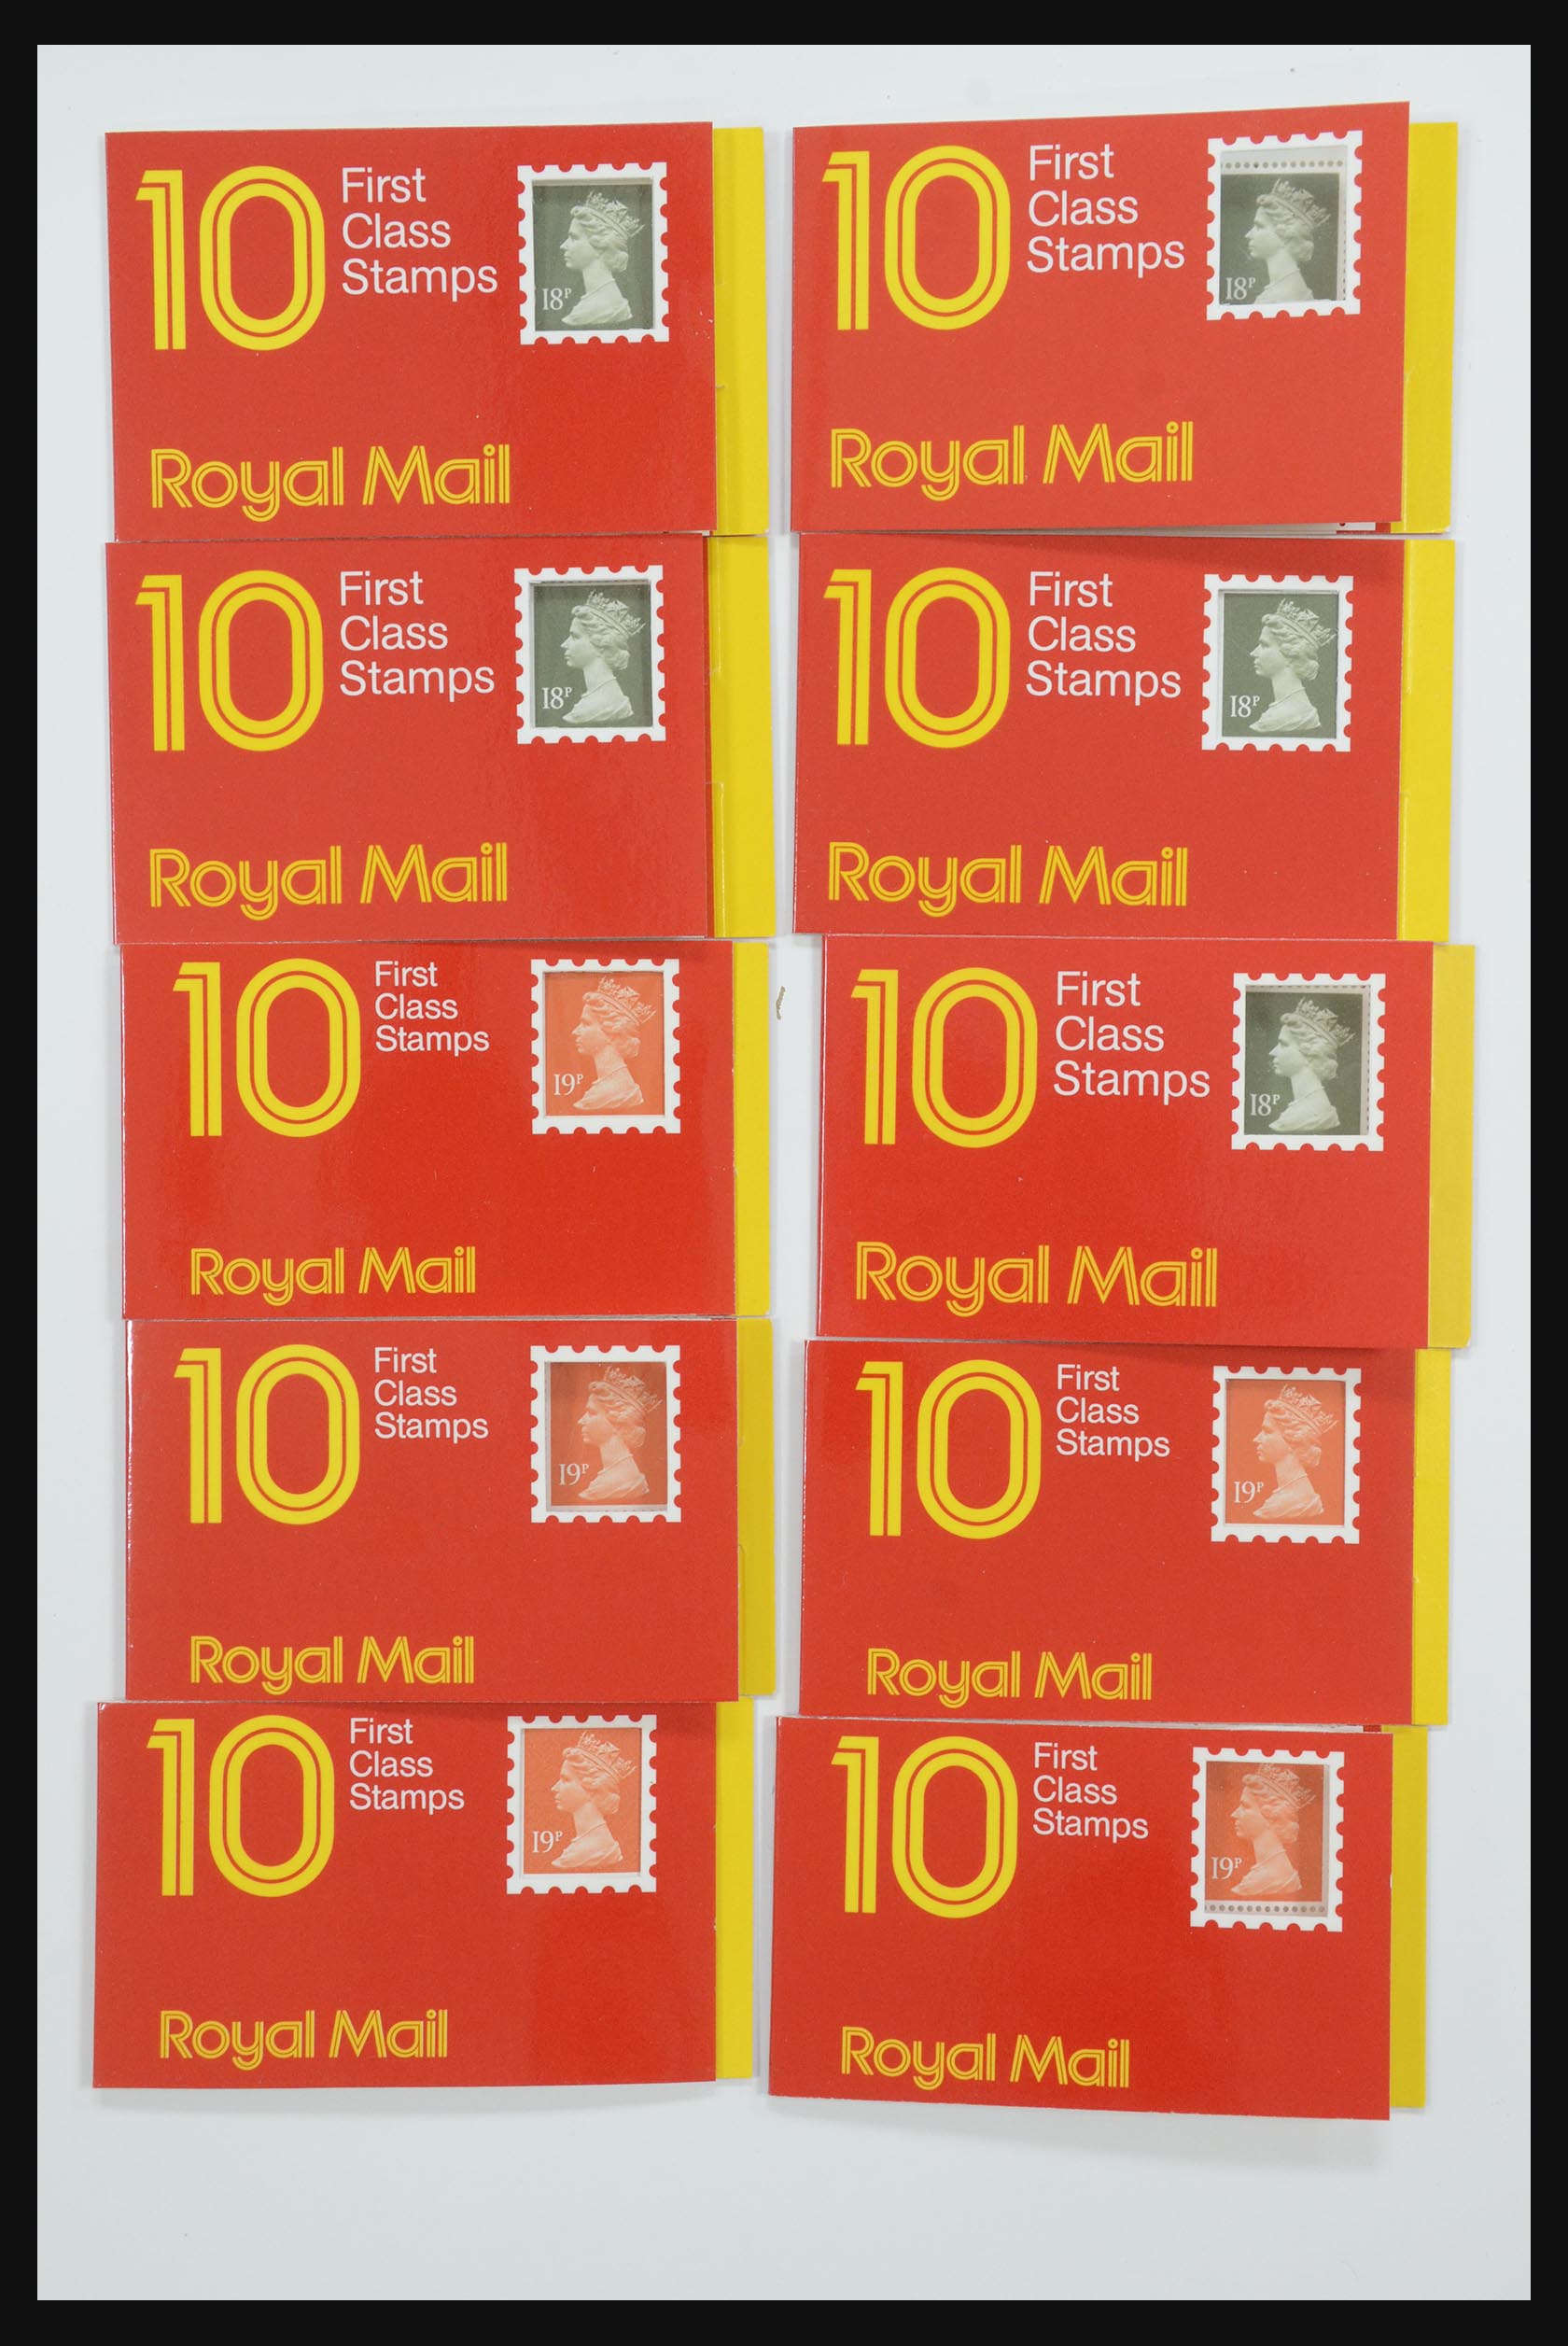 31961 030 - 31961 Great Britain stampbooklets 1971-1999.